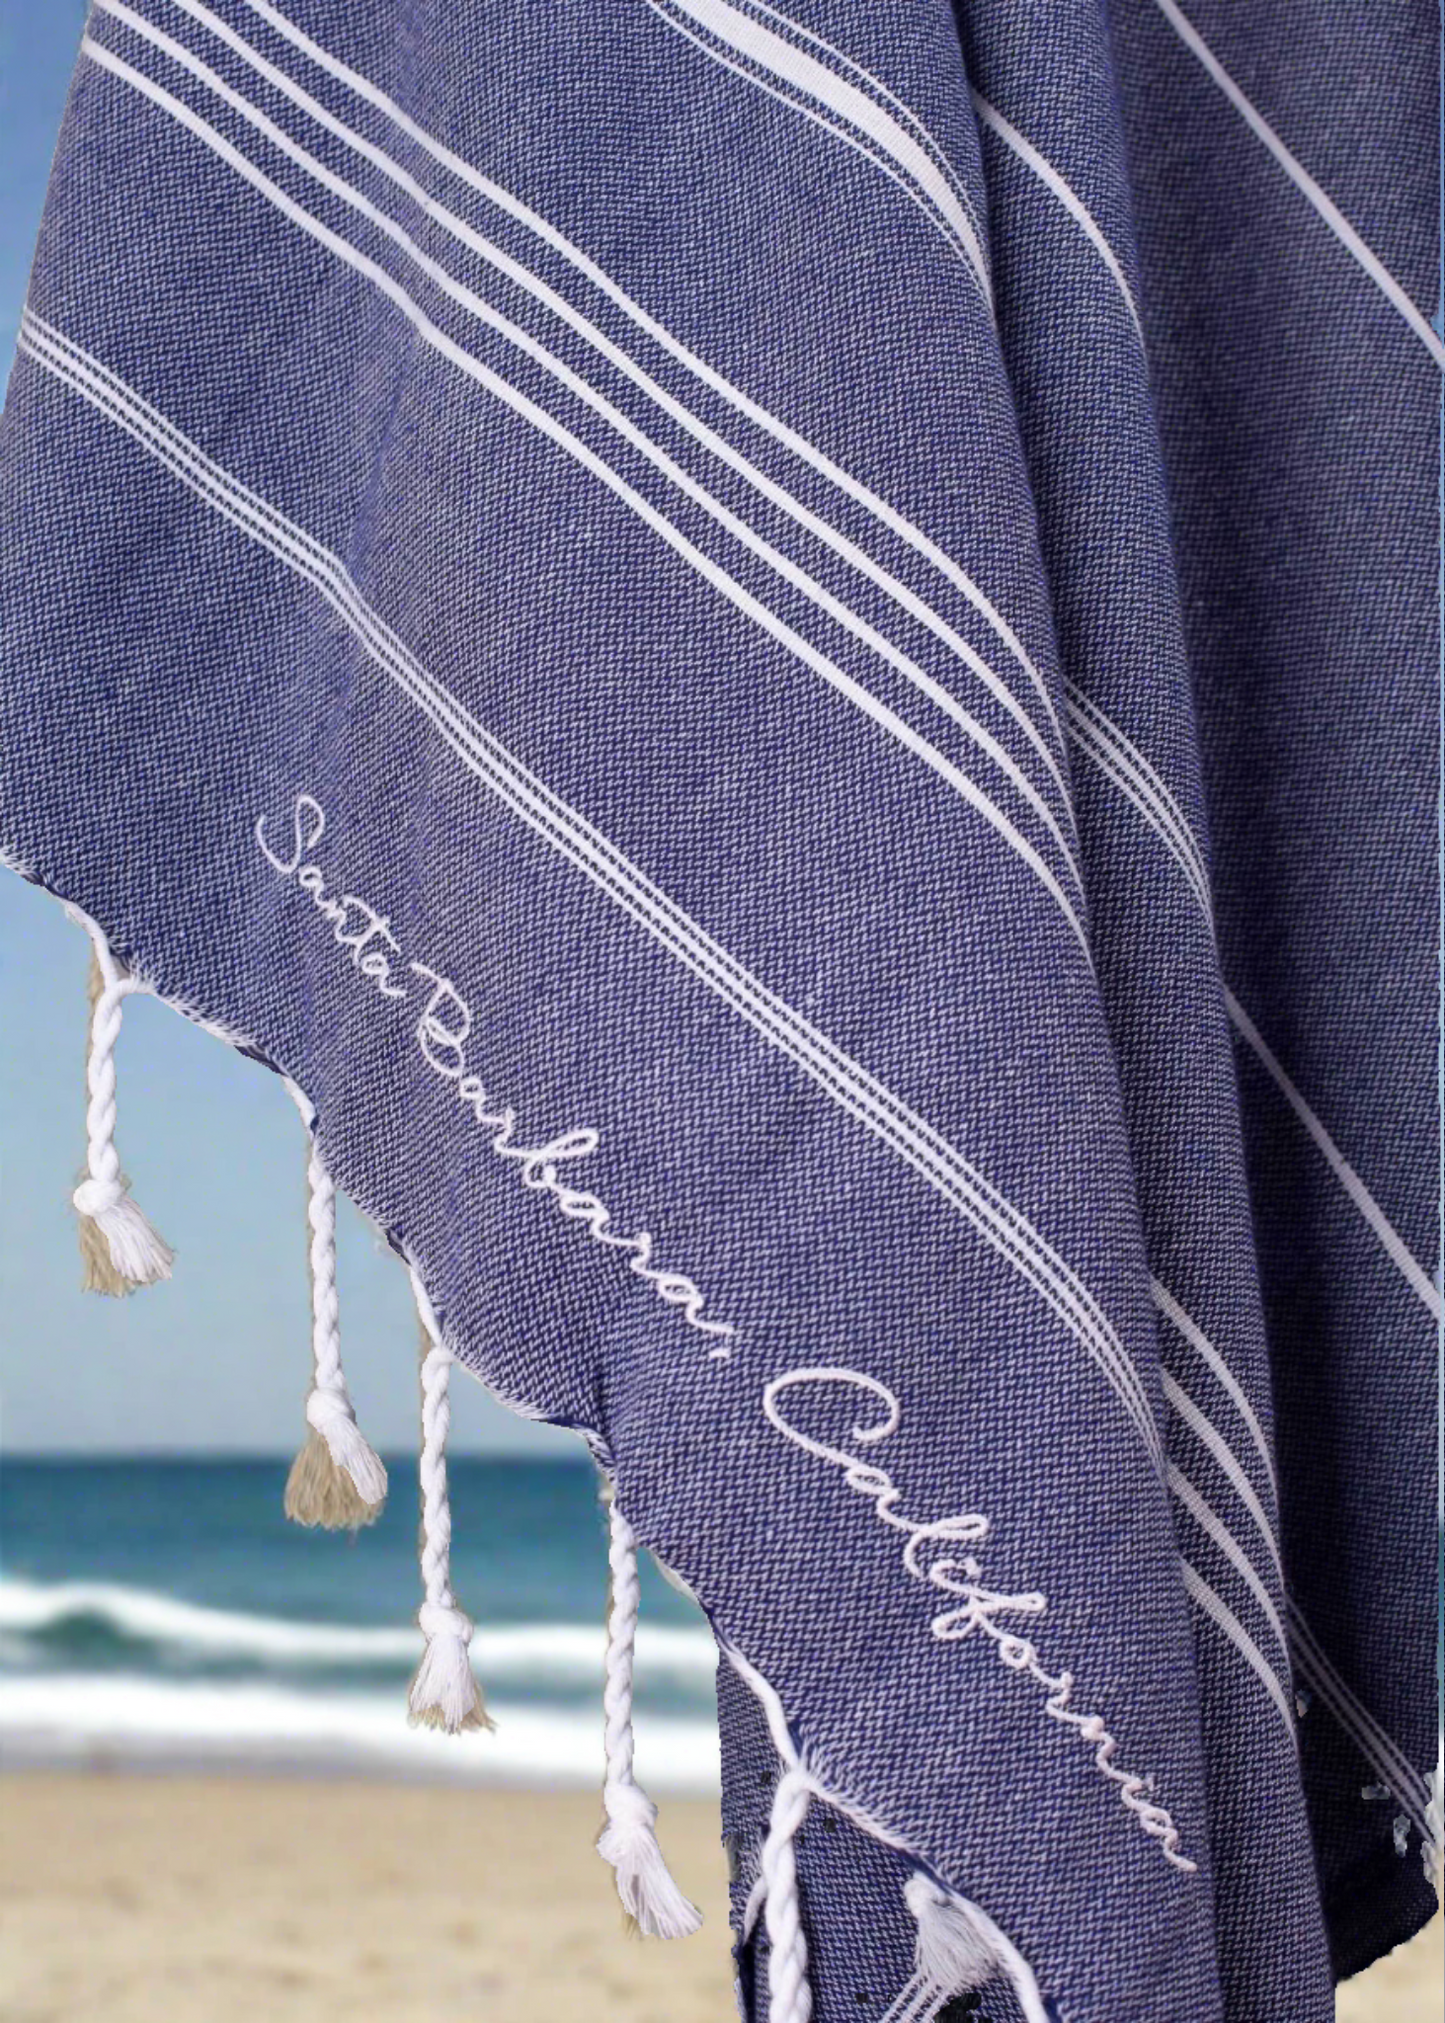 Santa Barbara Embroidered Towel